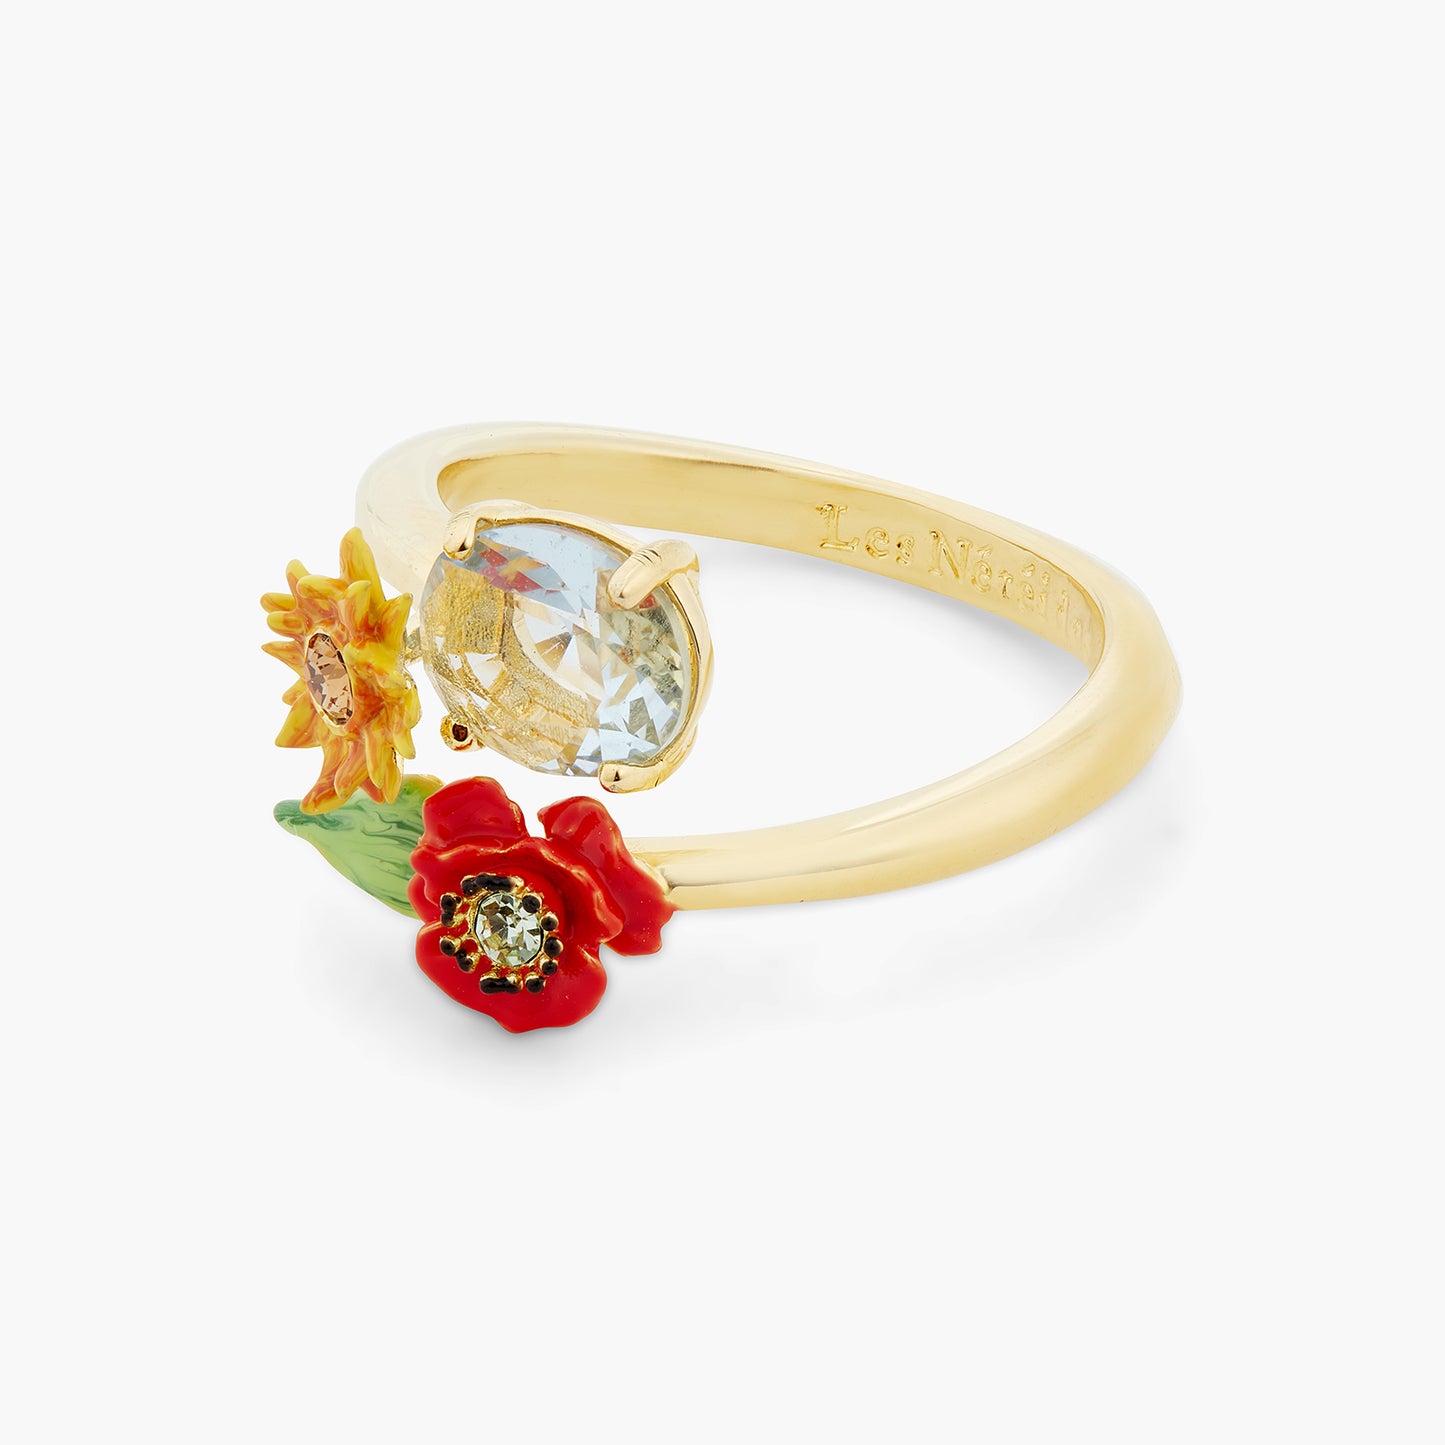 Wildflower And Round Stone Adjustable Ring | ATPO6021